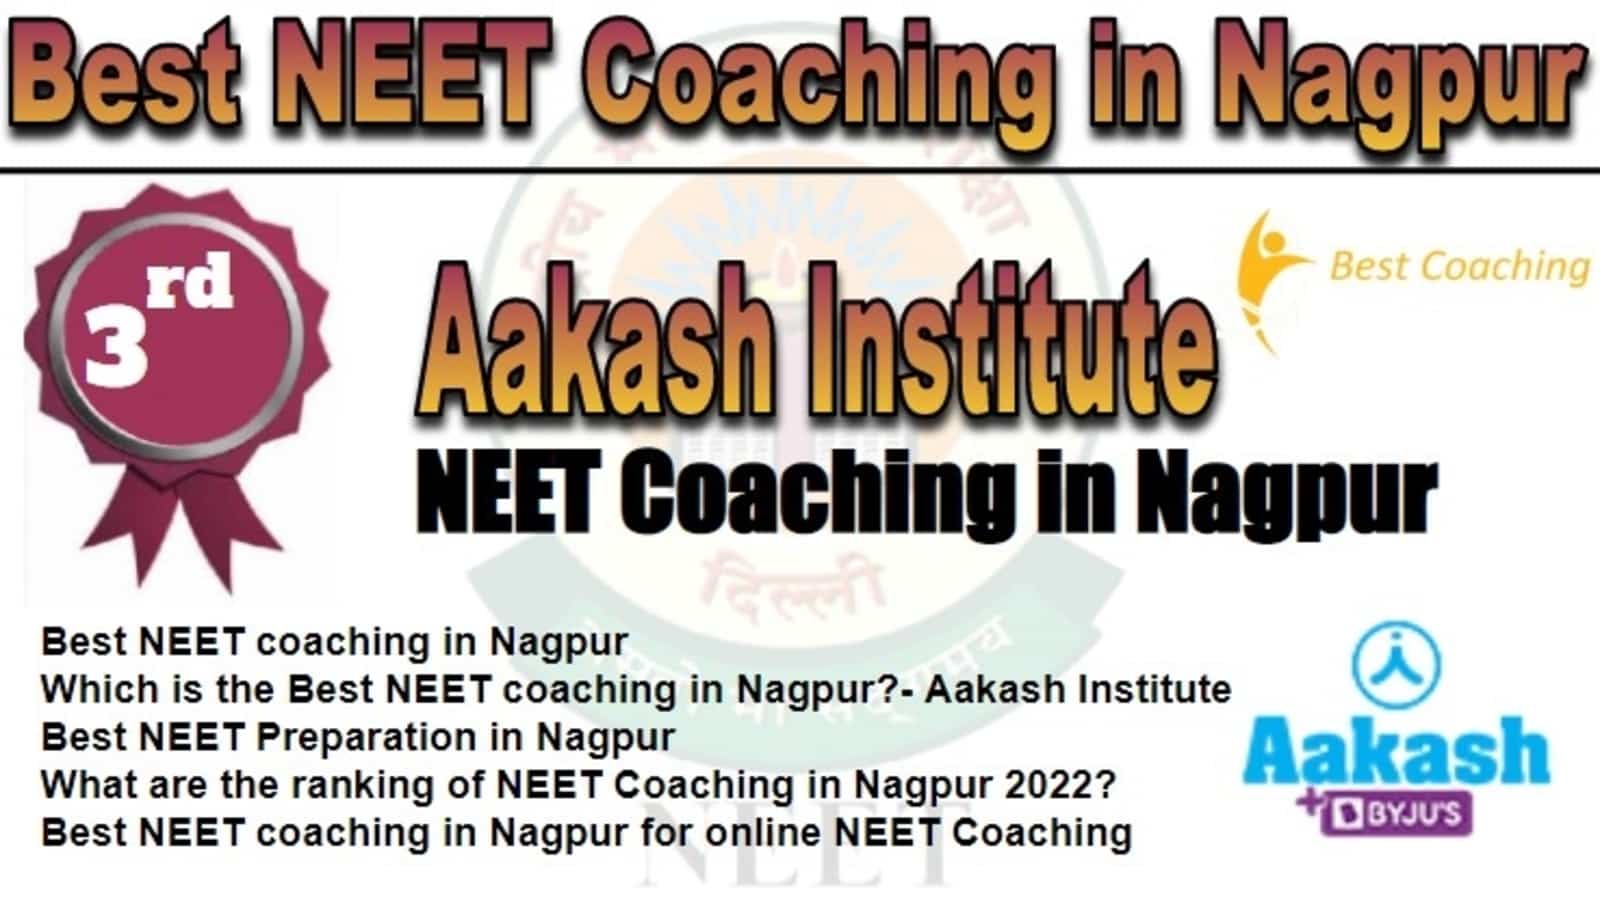 Rank 3 Best NEET Coaching in Nagpur